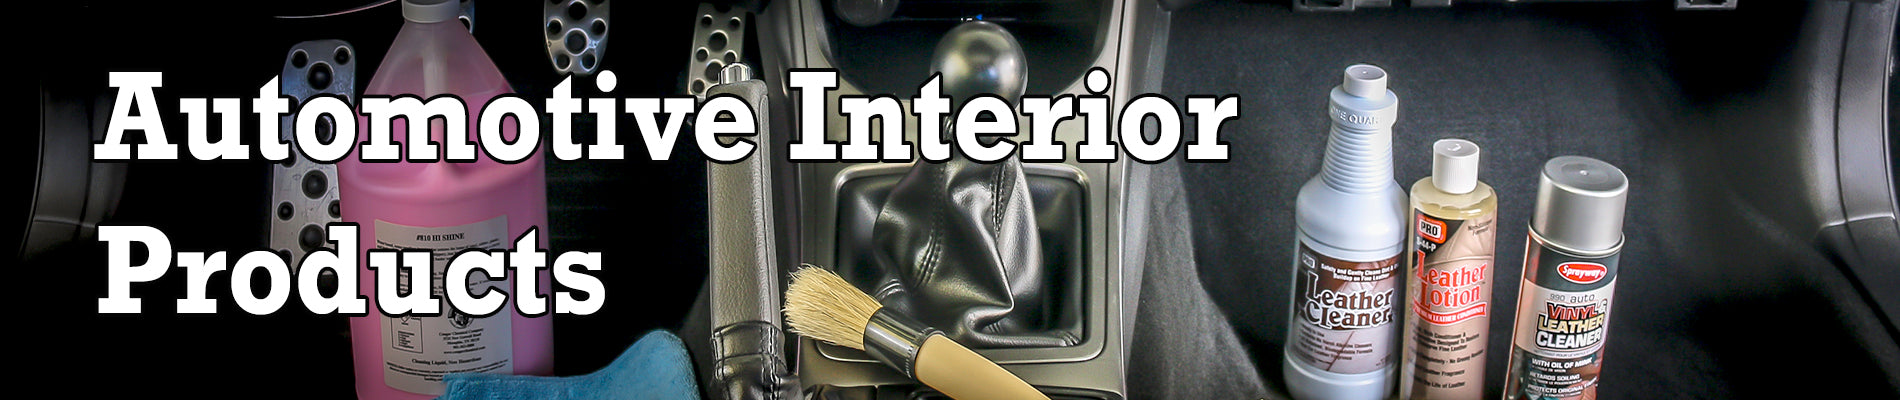 Automotive Interior Products